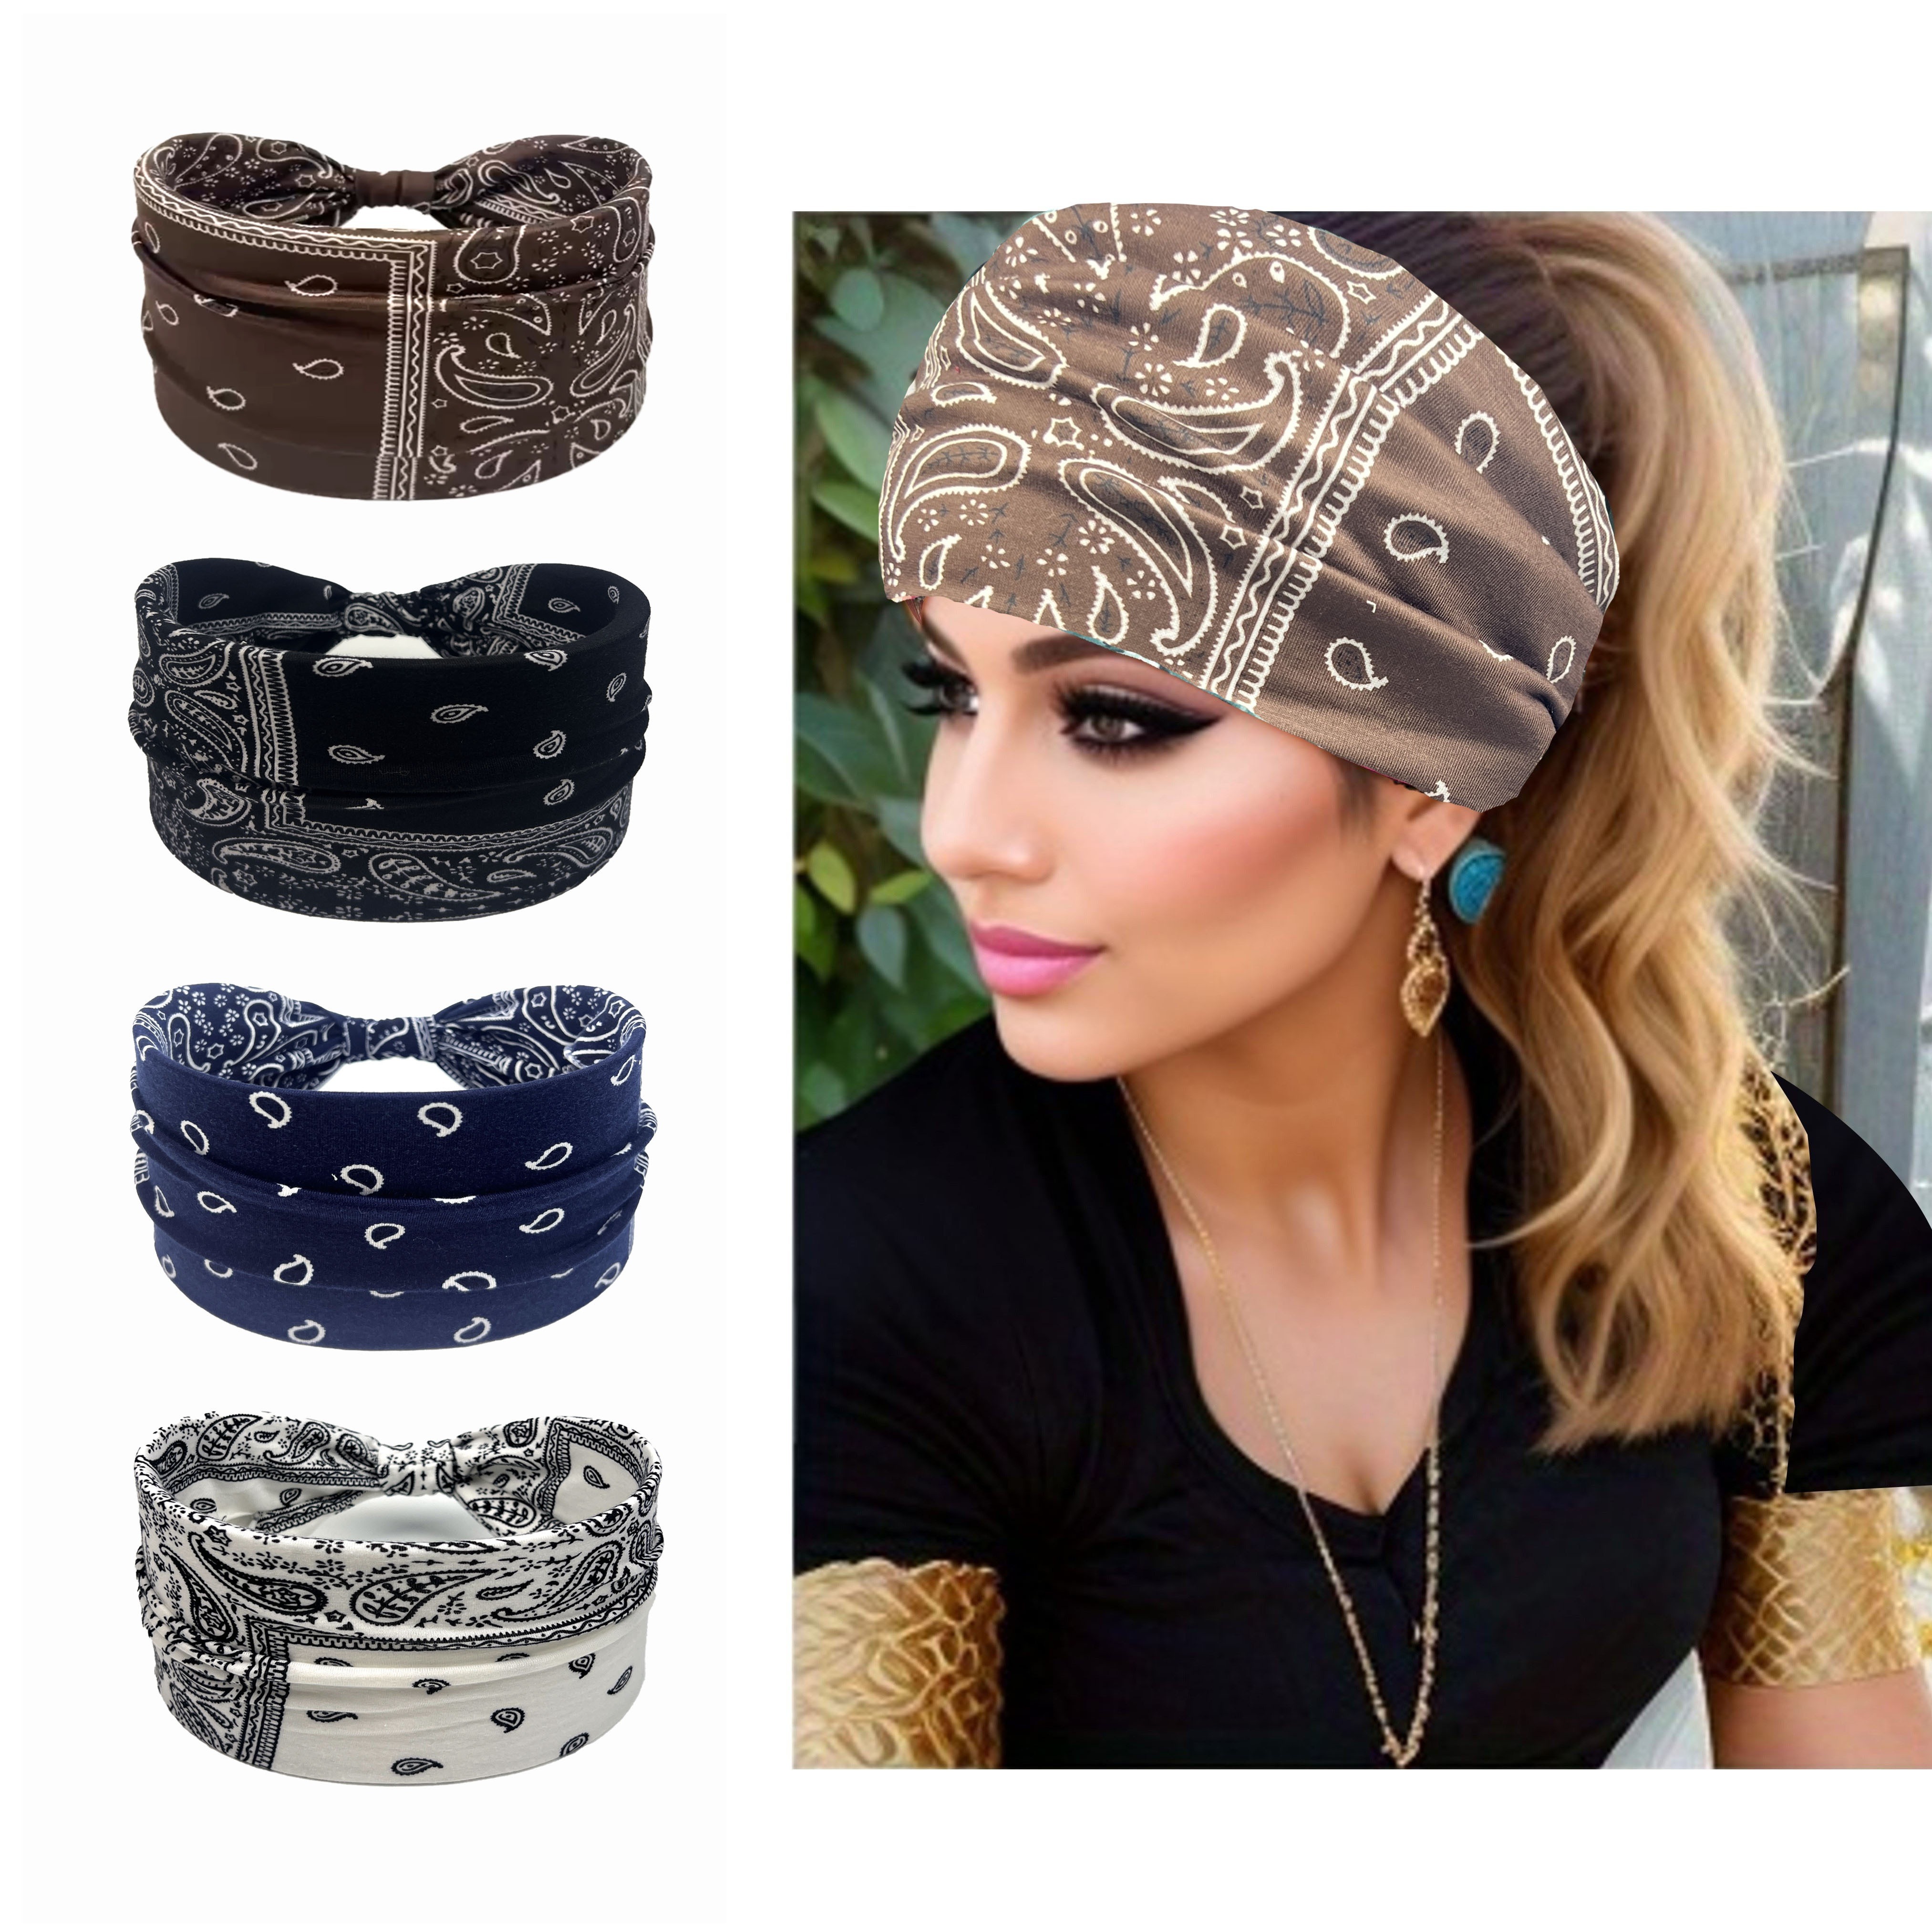 

Boho Chic 4-piece Headband Set For Women - Wide, Elastic Sports & Yoga Hairbands With Paisley Print